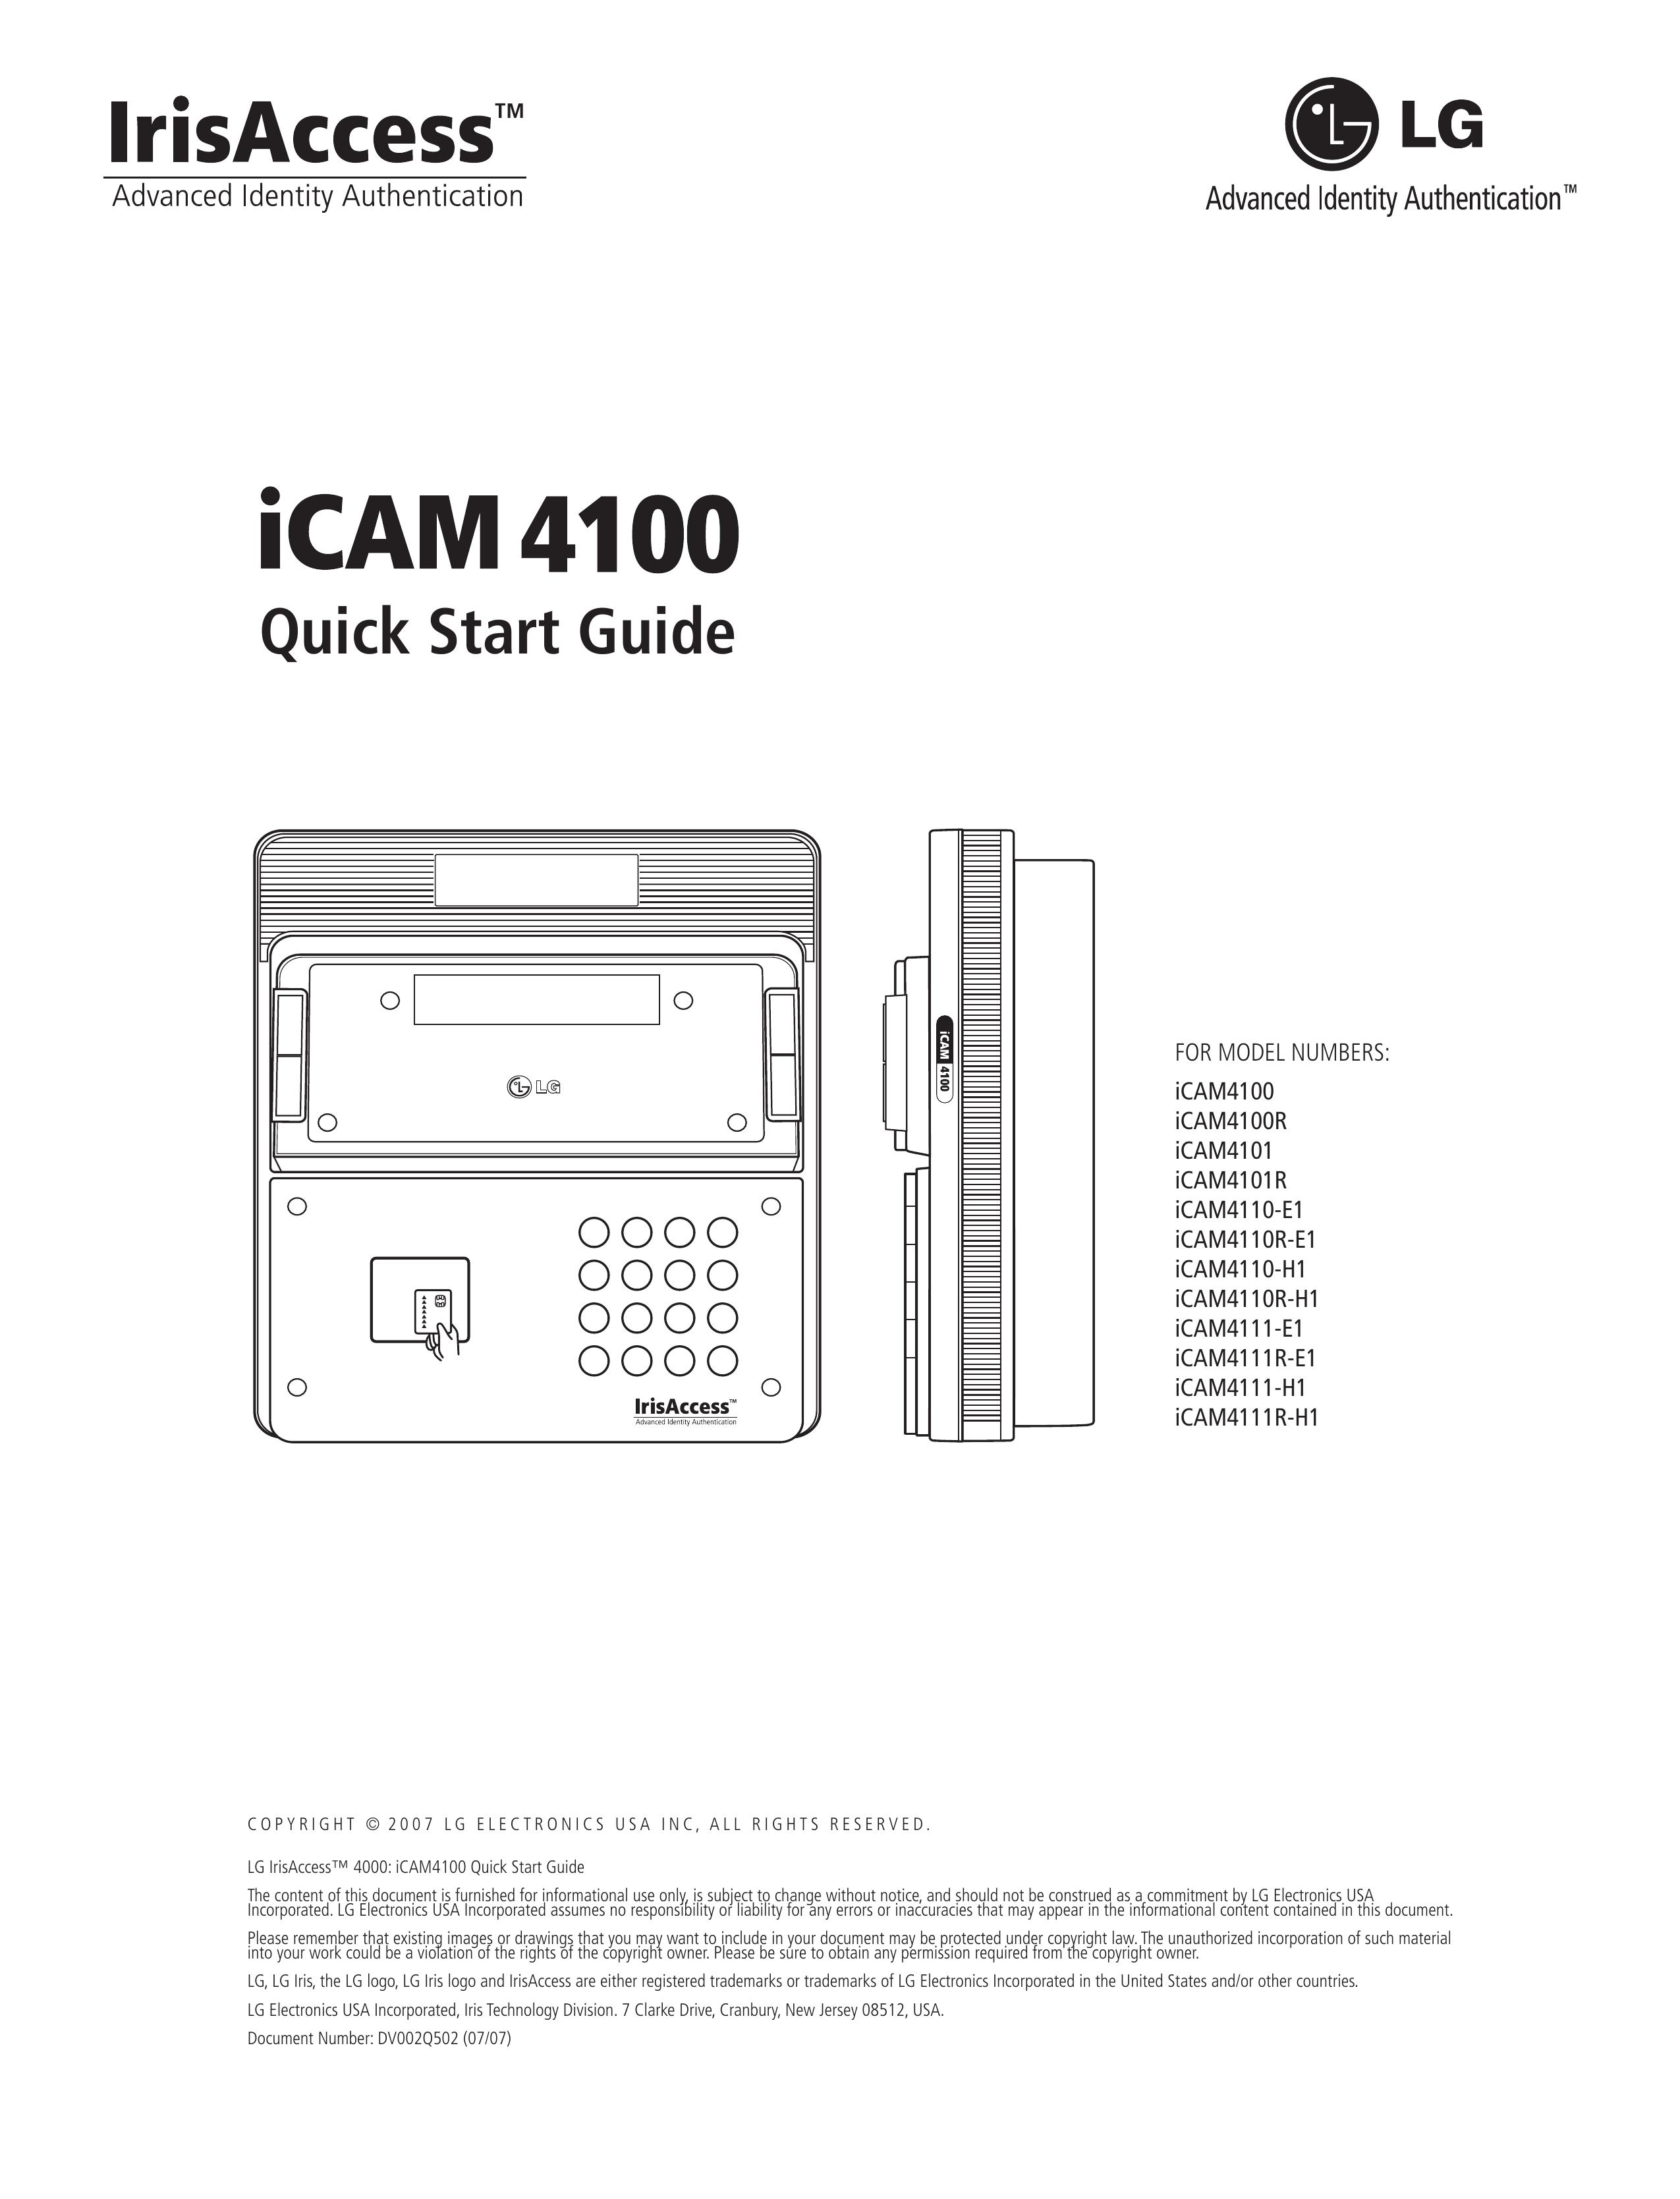 LG Electronics iCAM4110-E1 Digital Camera User Manual